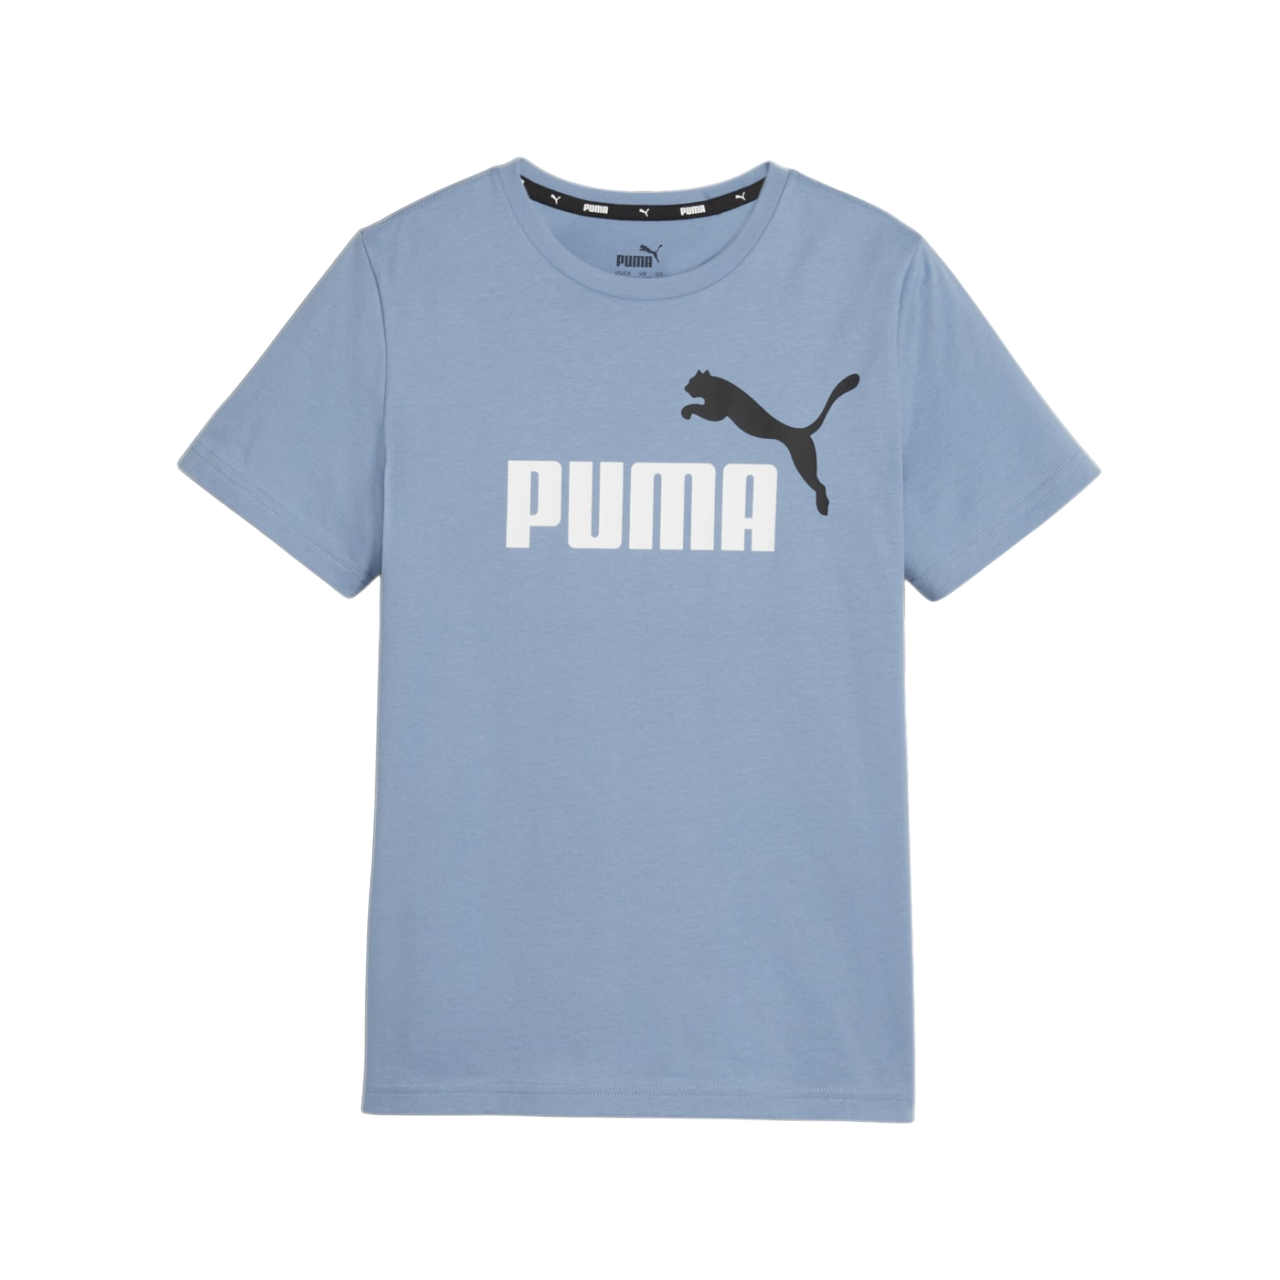 Puma maglietta manica corta ESS 2 stampa Logo grande 586985-20 celeste